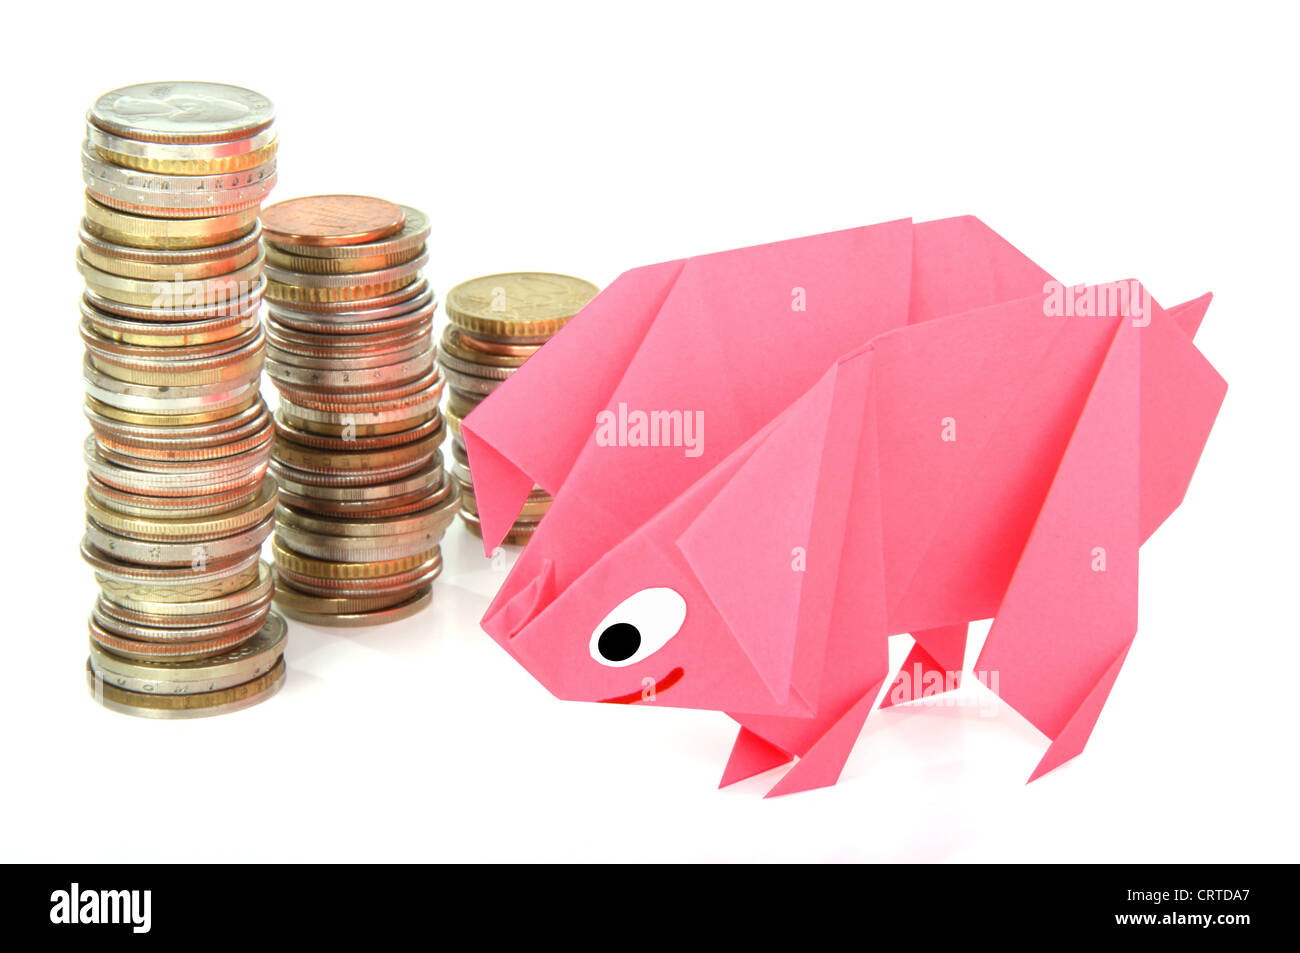 Conceptual image of money, earnings, and savings Stock Photo